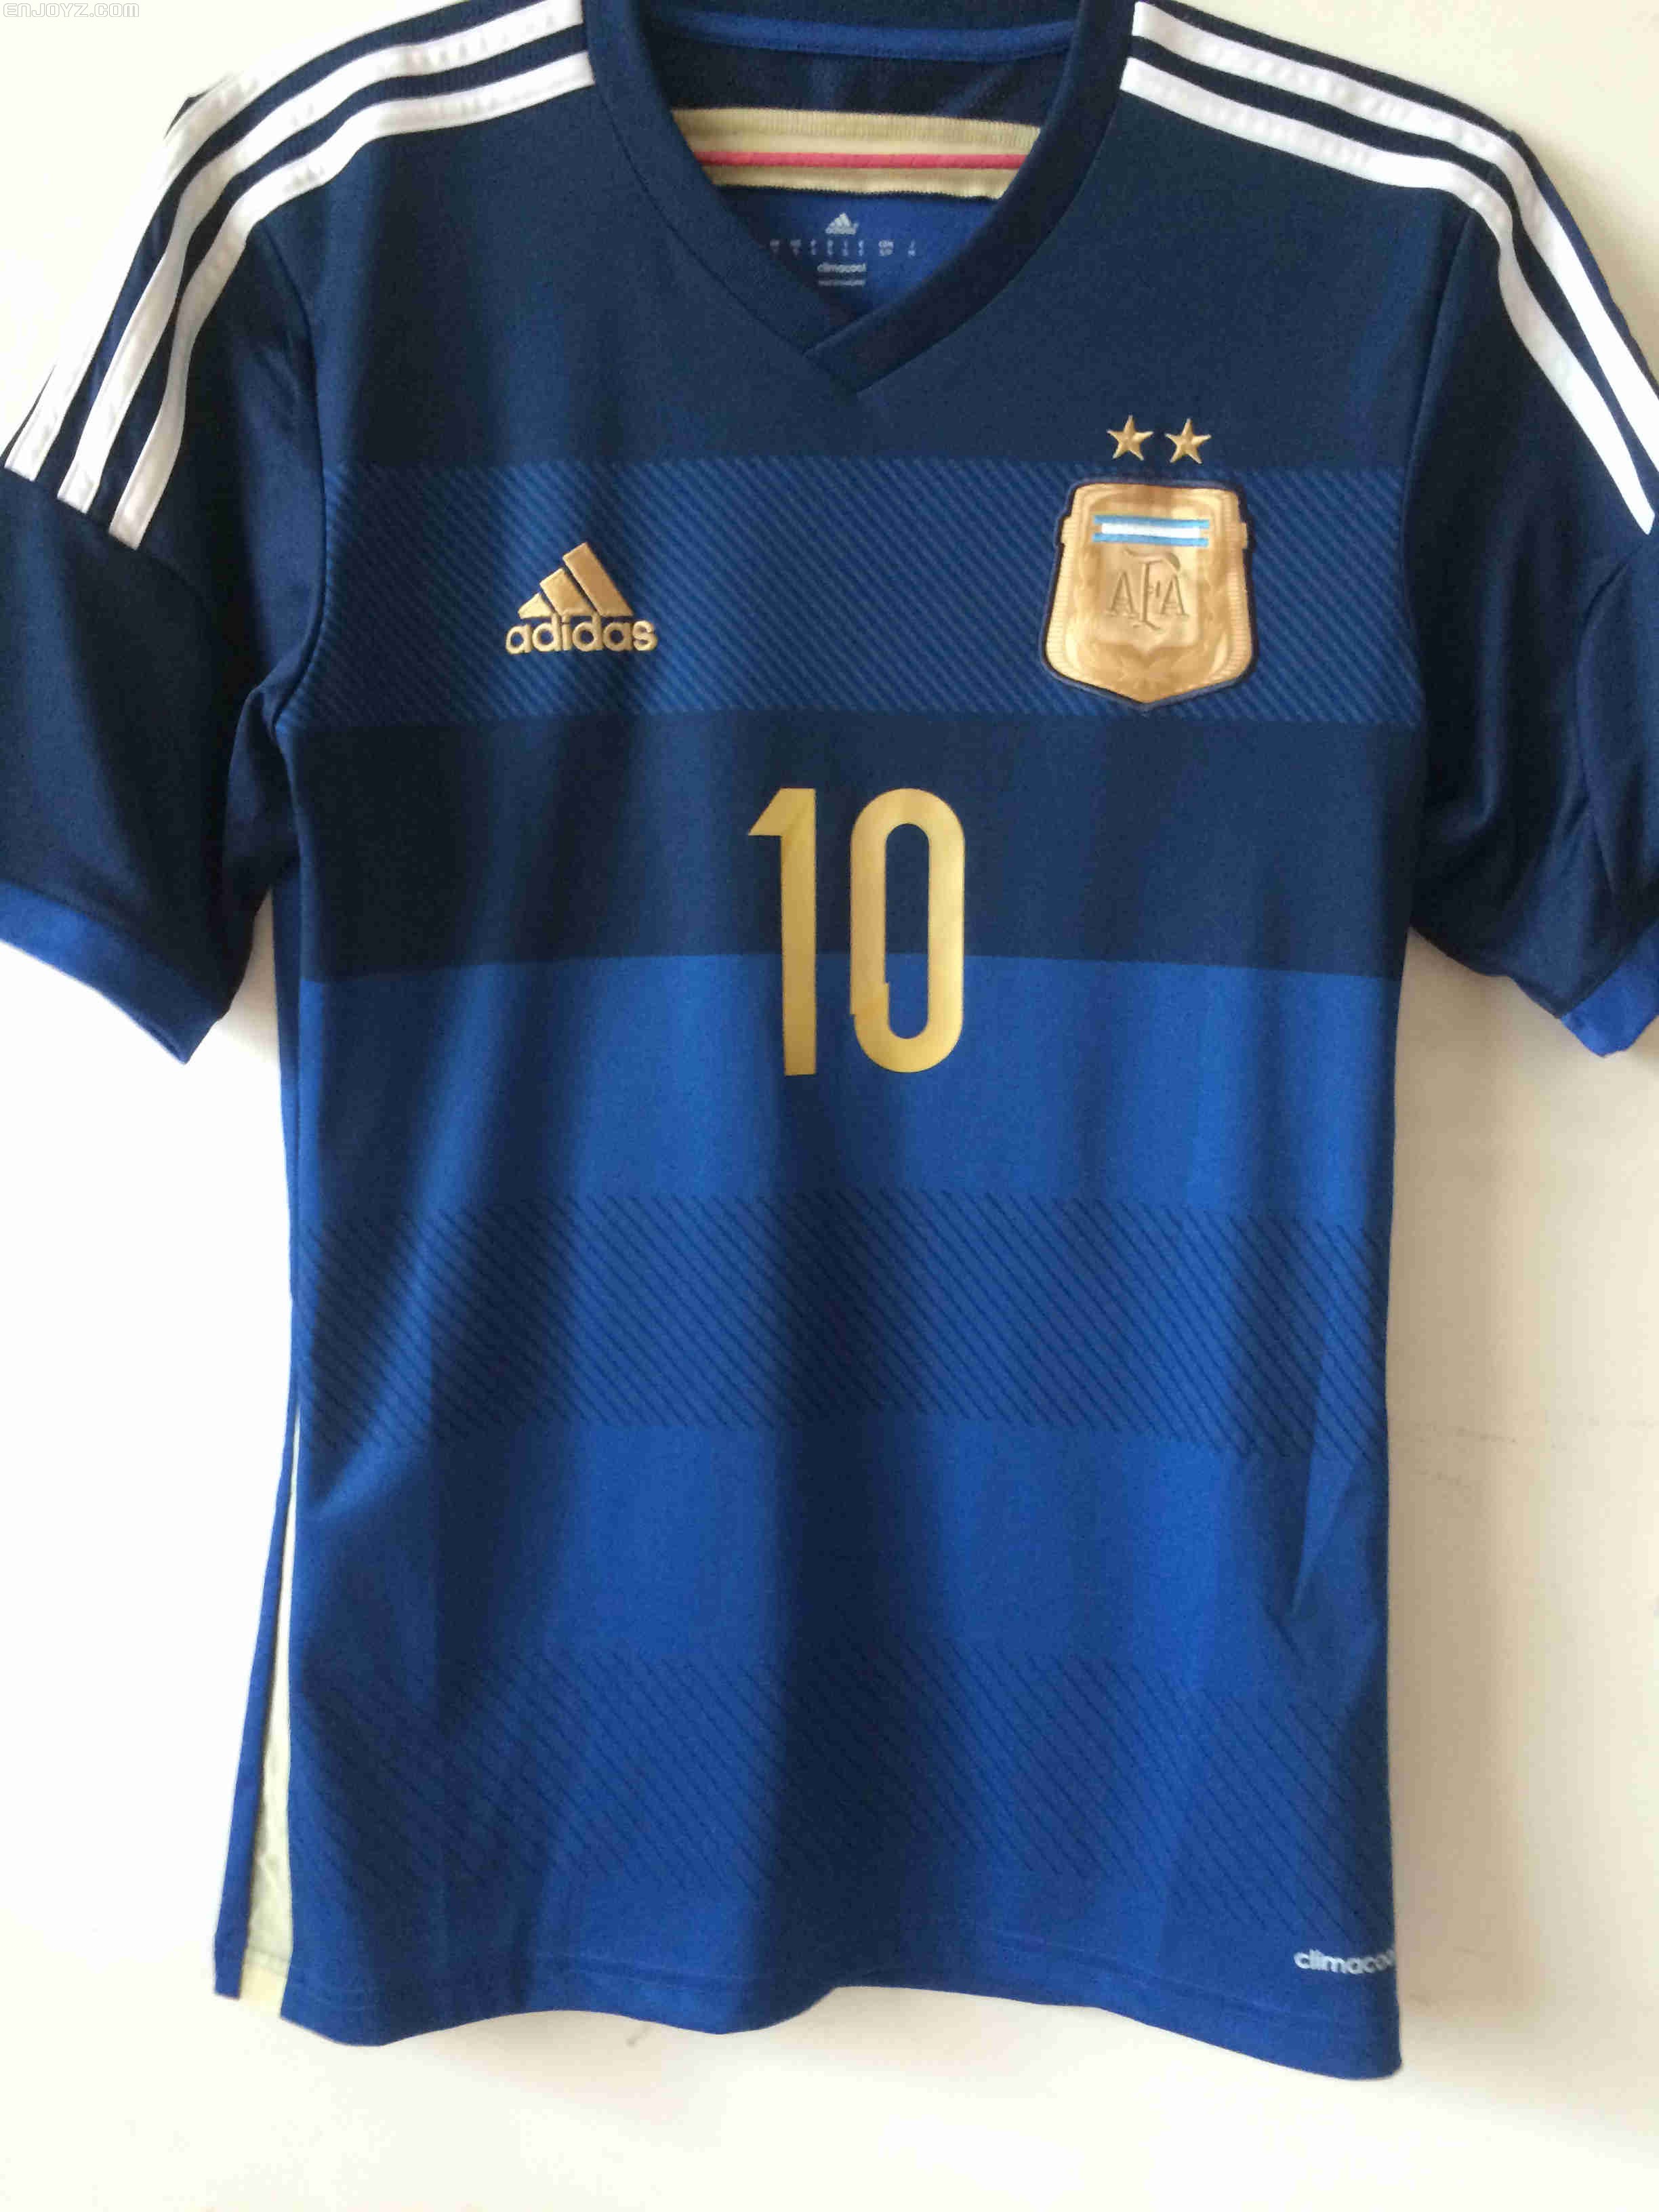 阿根廷2014客场球衣_阿根廷世界杯客场球衣_阿根廷客场球衣2014